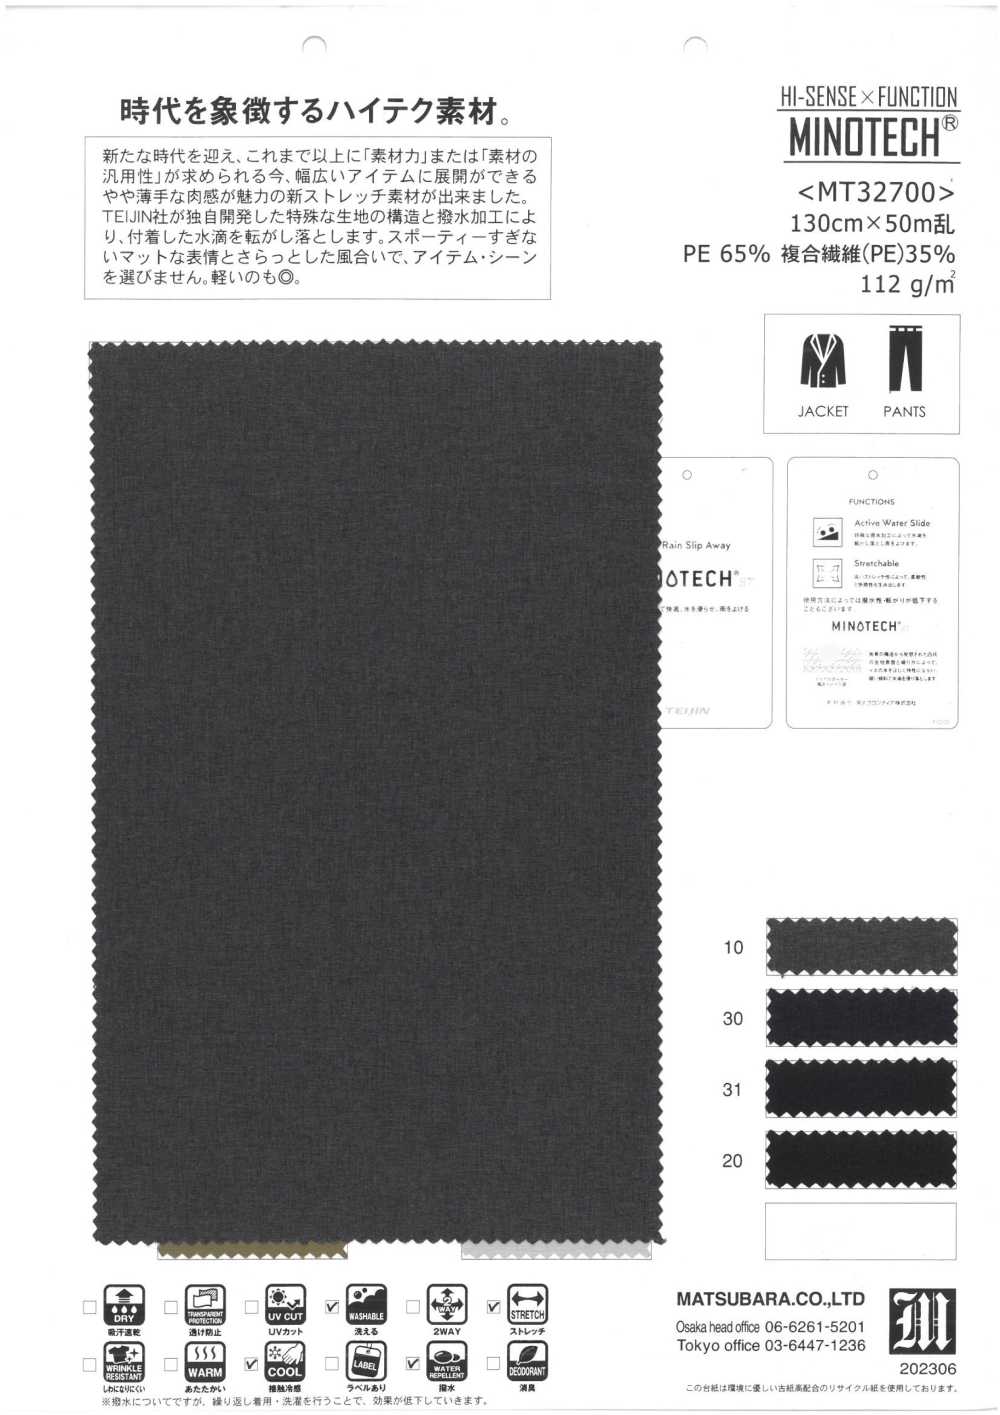 MT32700 HI-SENSE×FUNCIÓN MINOTECH[Fabrica Textil] Matsubara